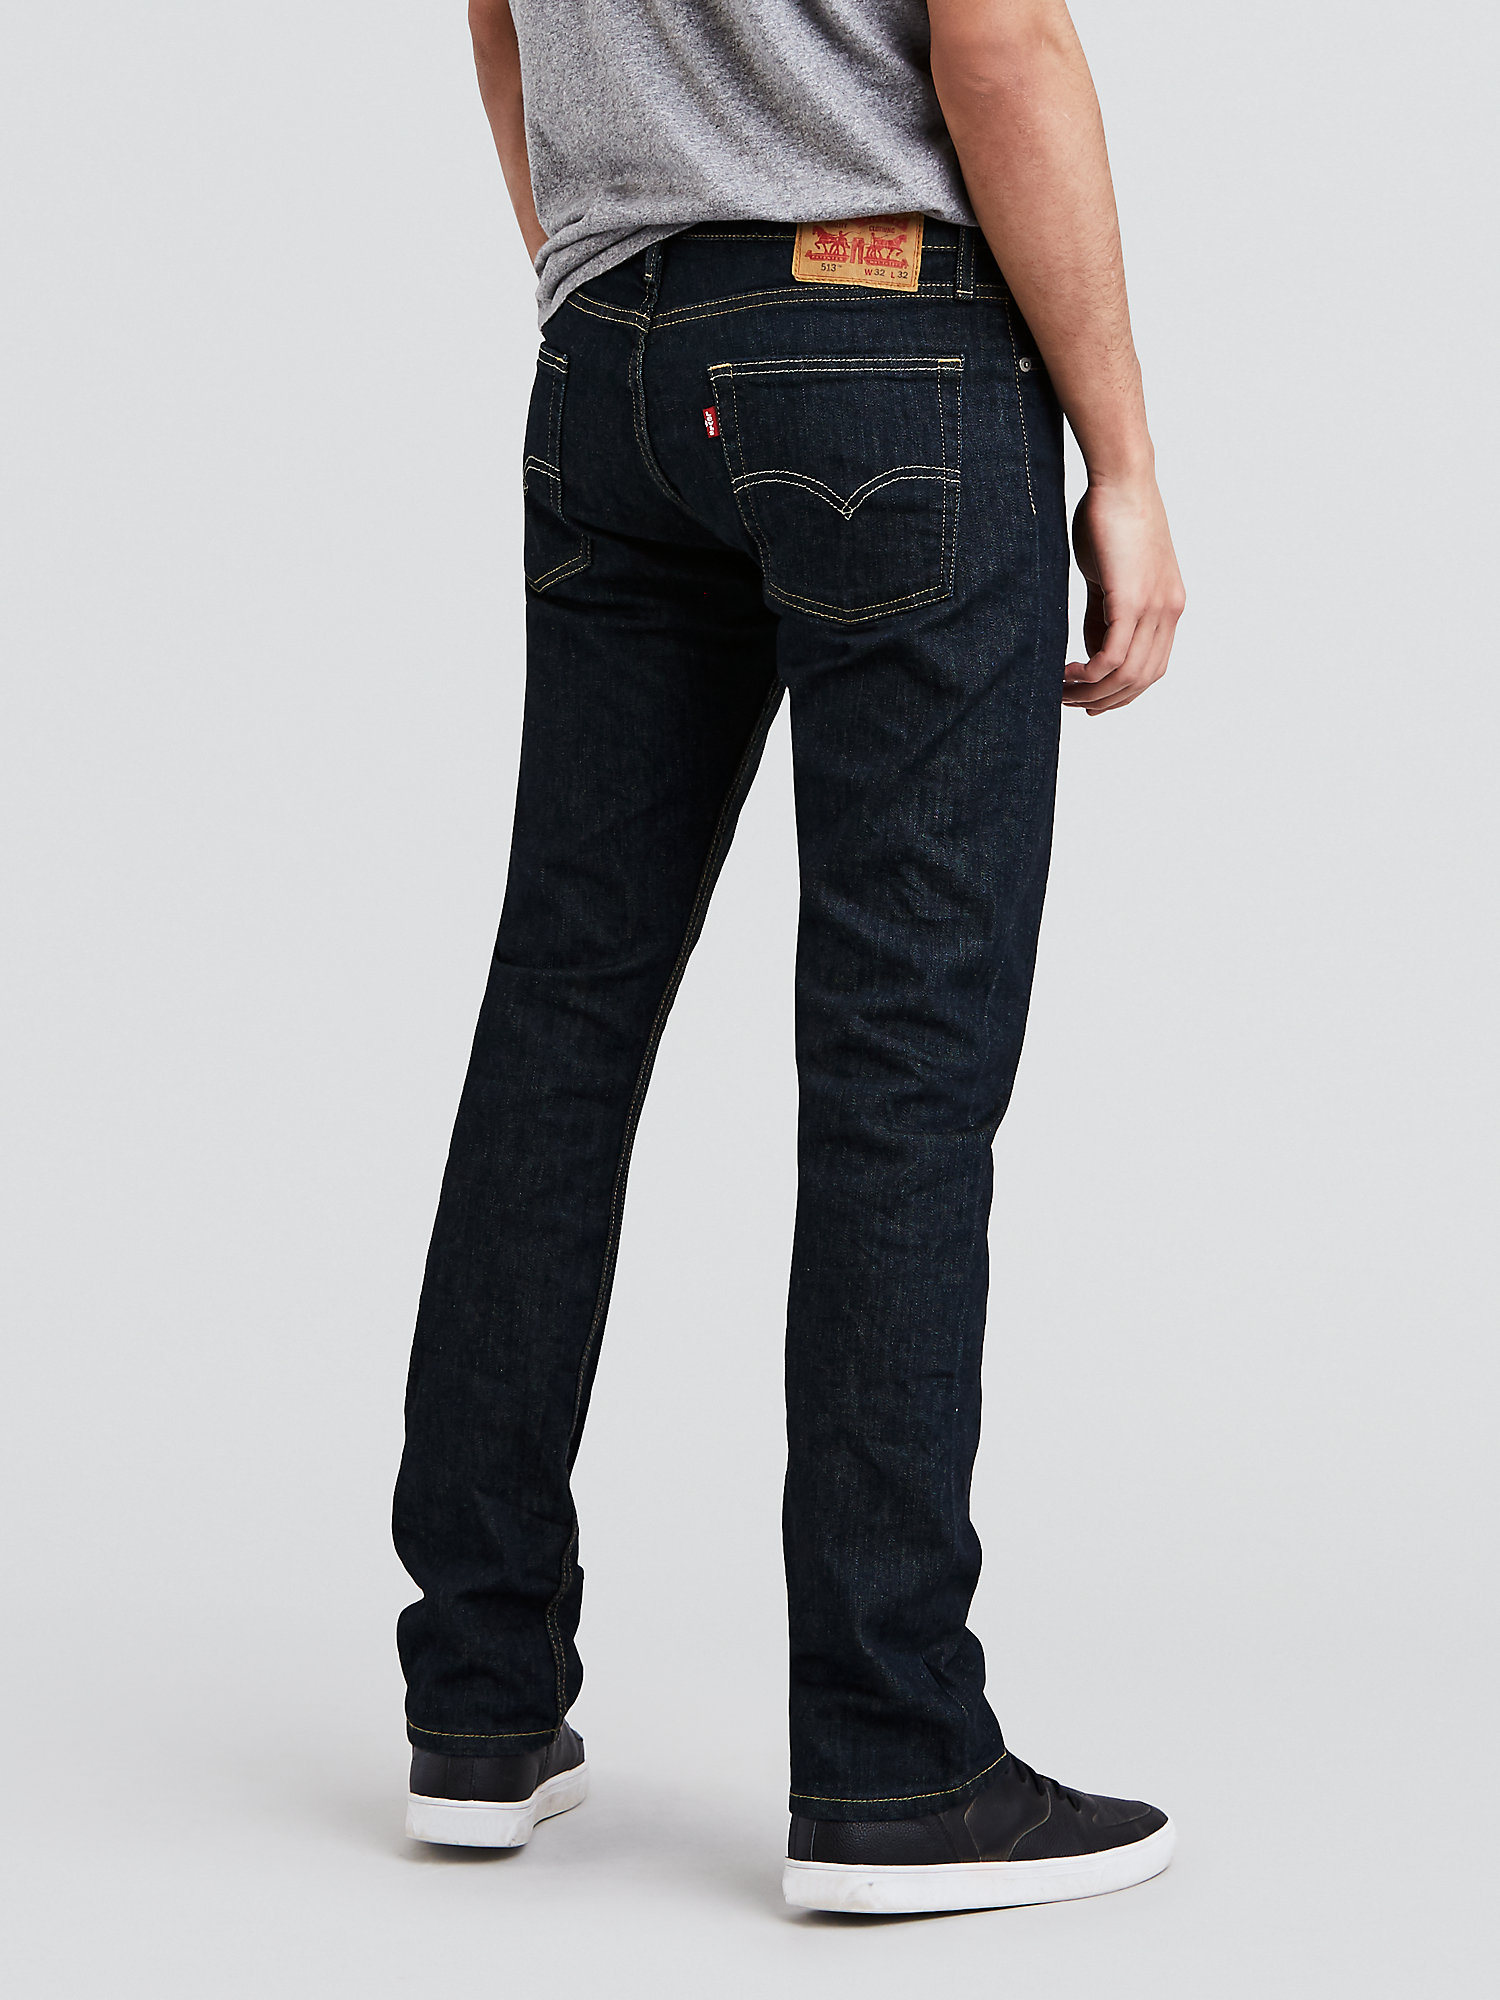 Levi's Men's 513 Slim Straight Fit Jeans - image 3 of 7